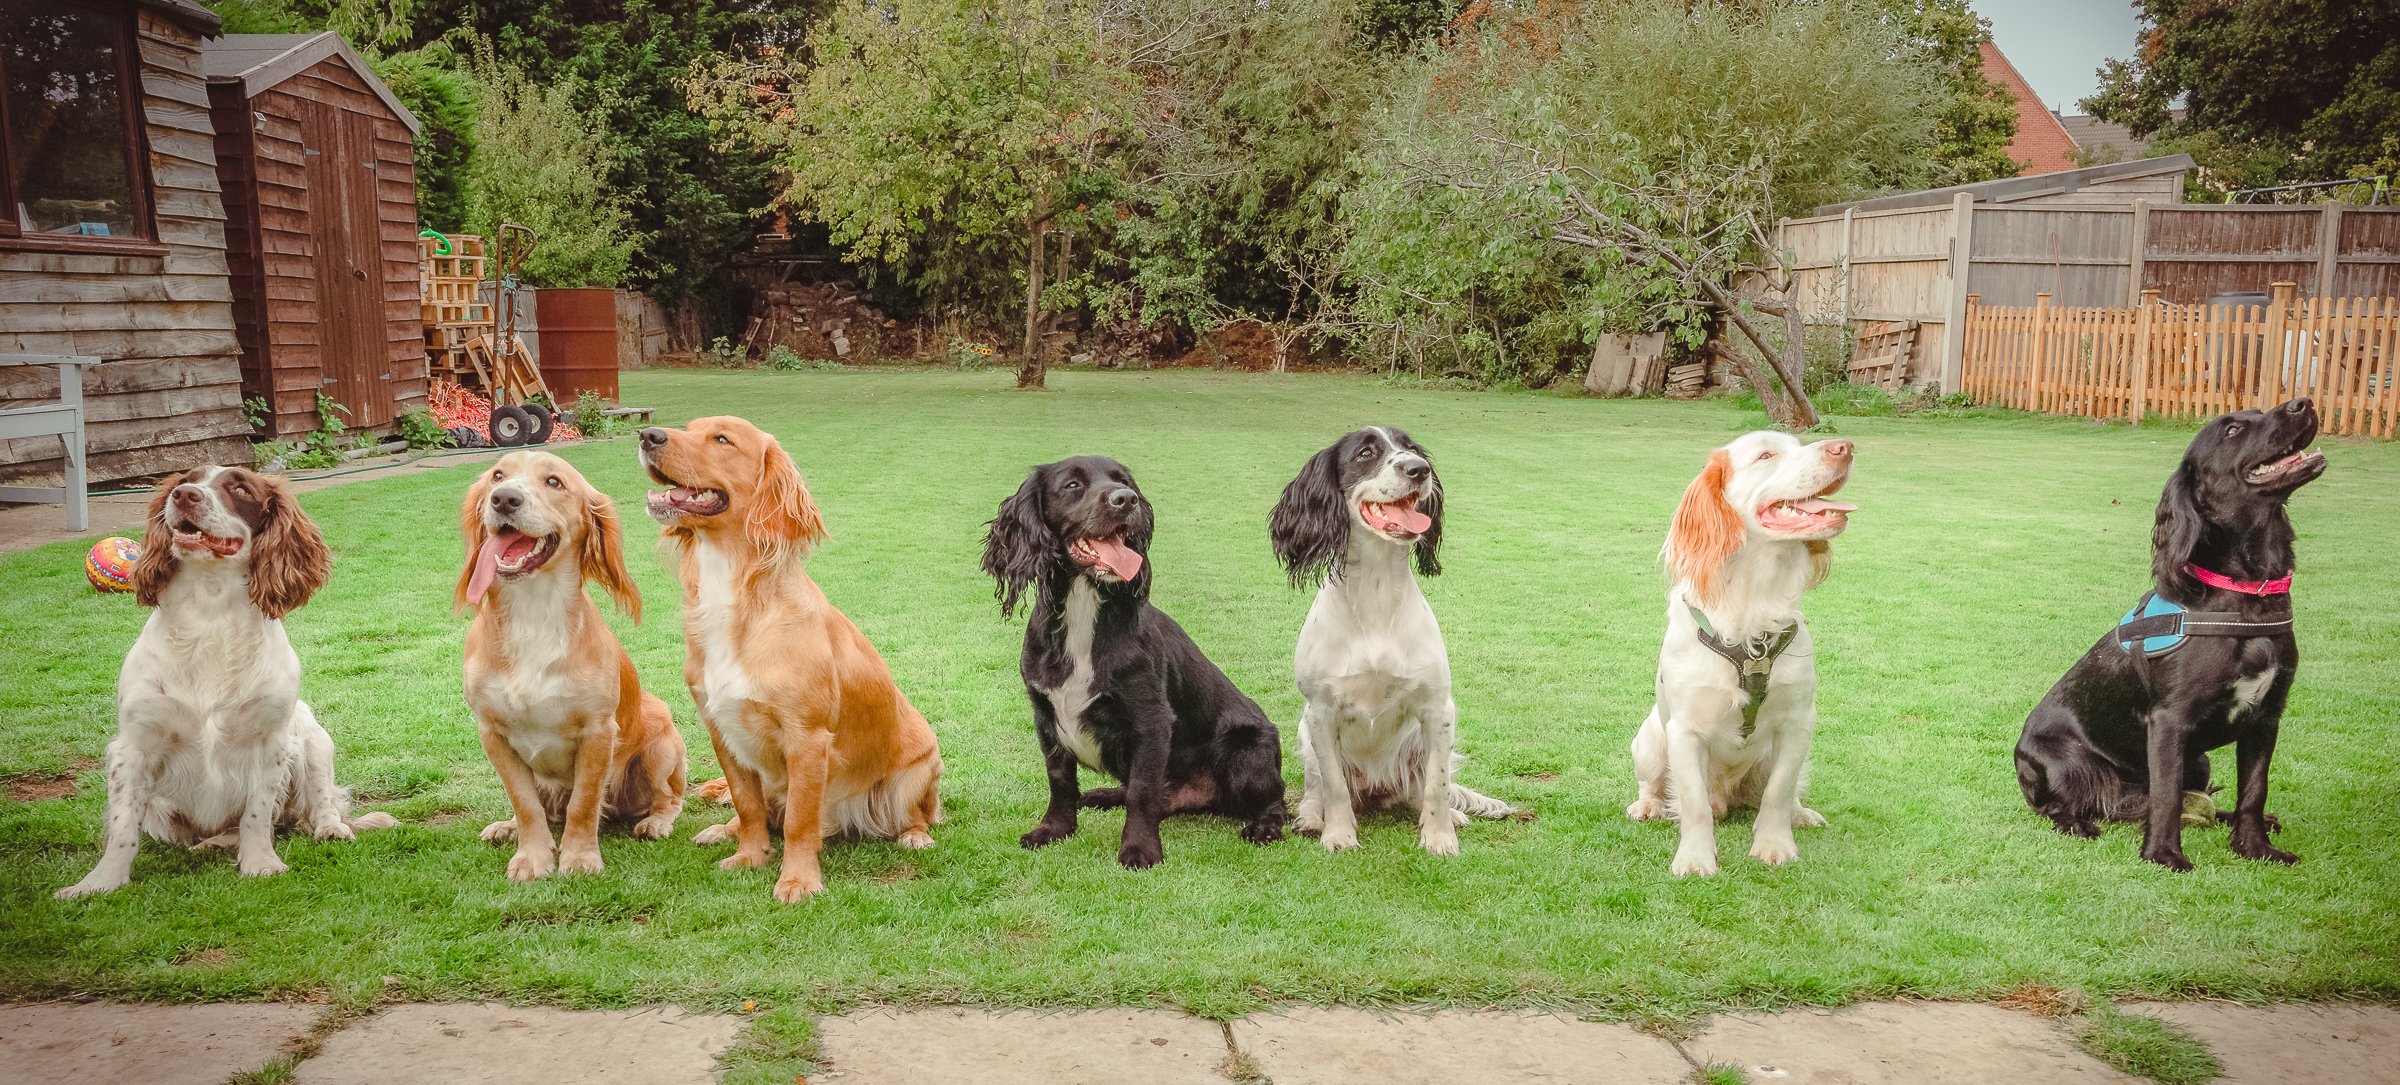 A Doggy Family Fiesta Through the Lens: Paws, Shutter, Action